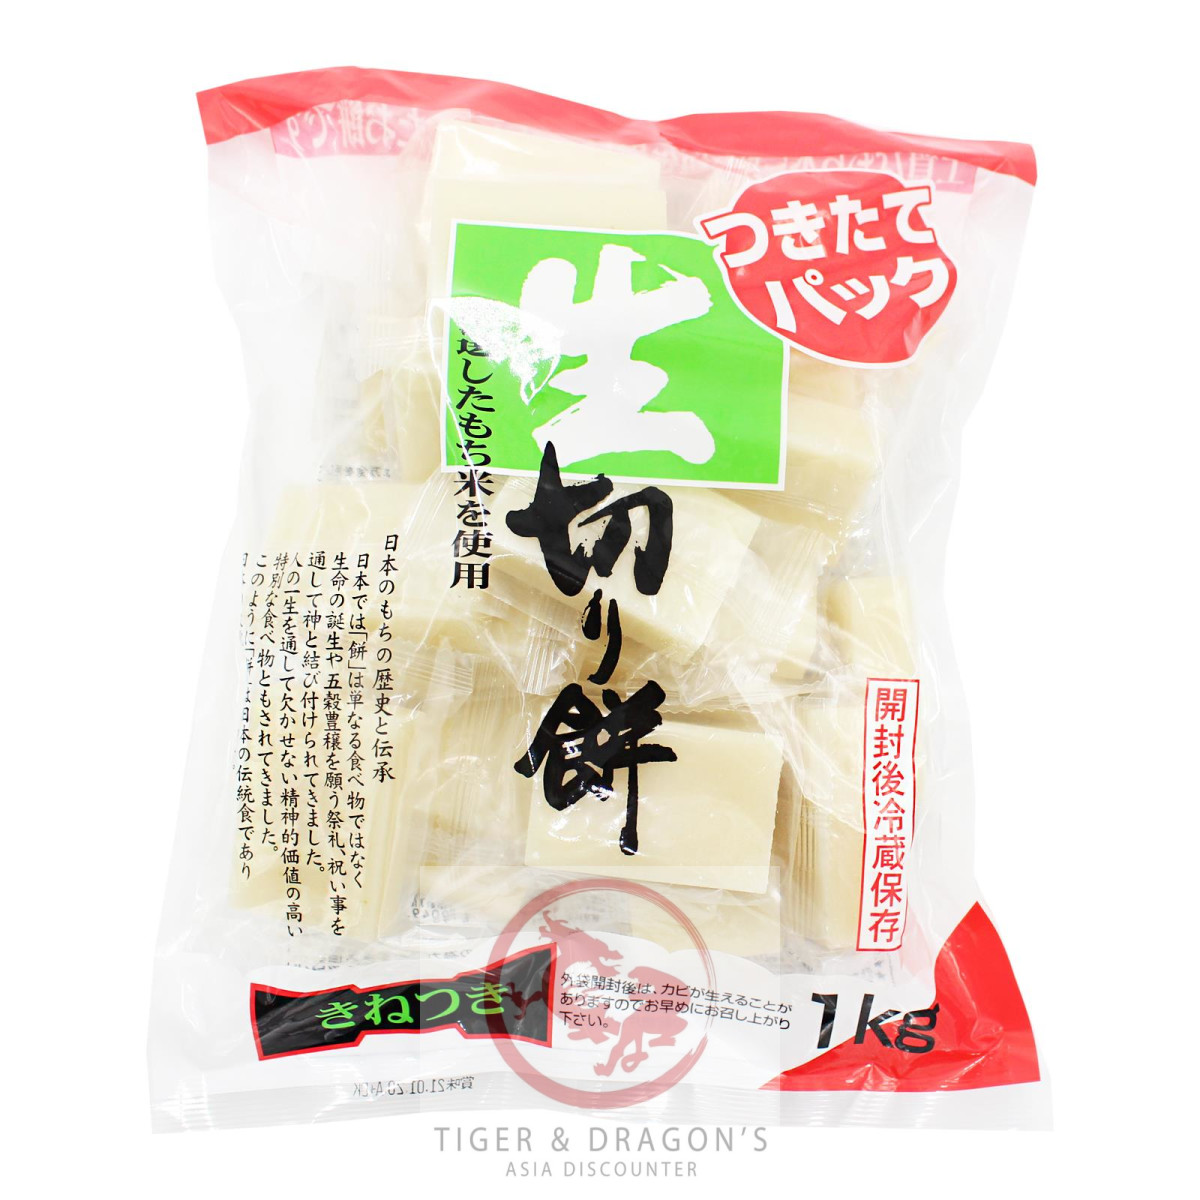 Daishin Kirimochi Baran Reiskuchen 1kg